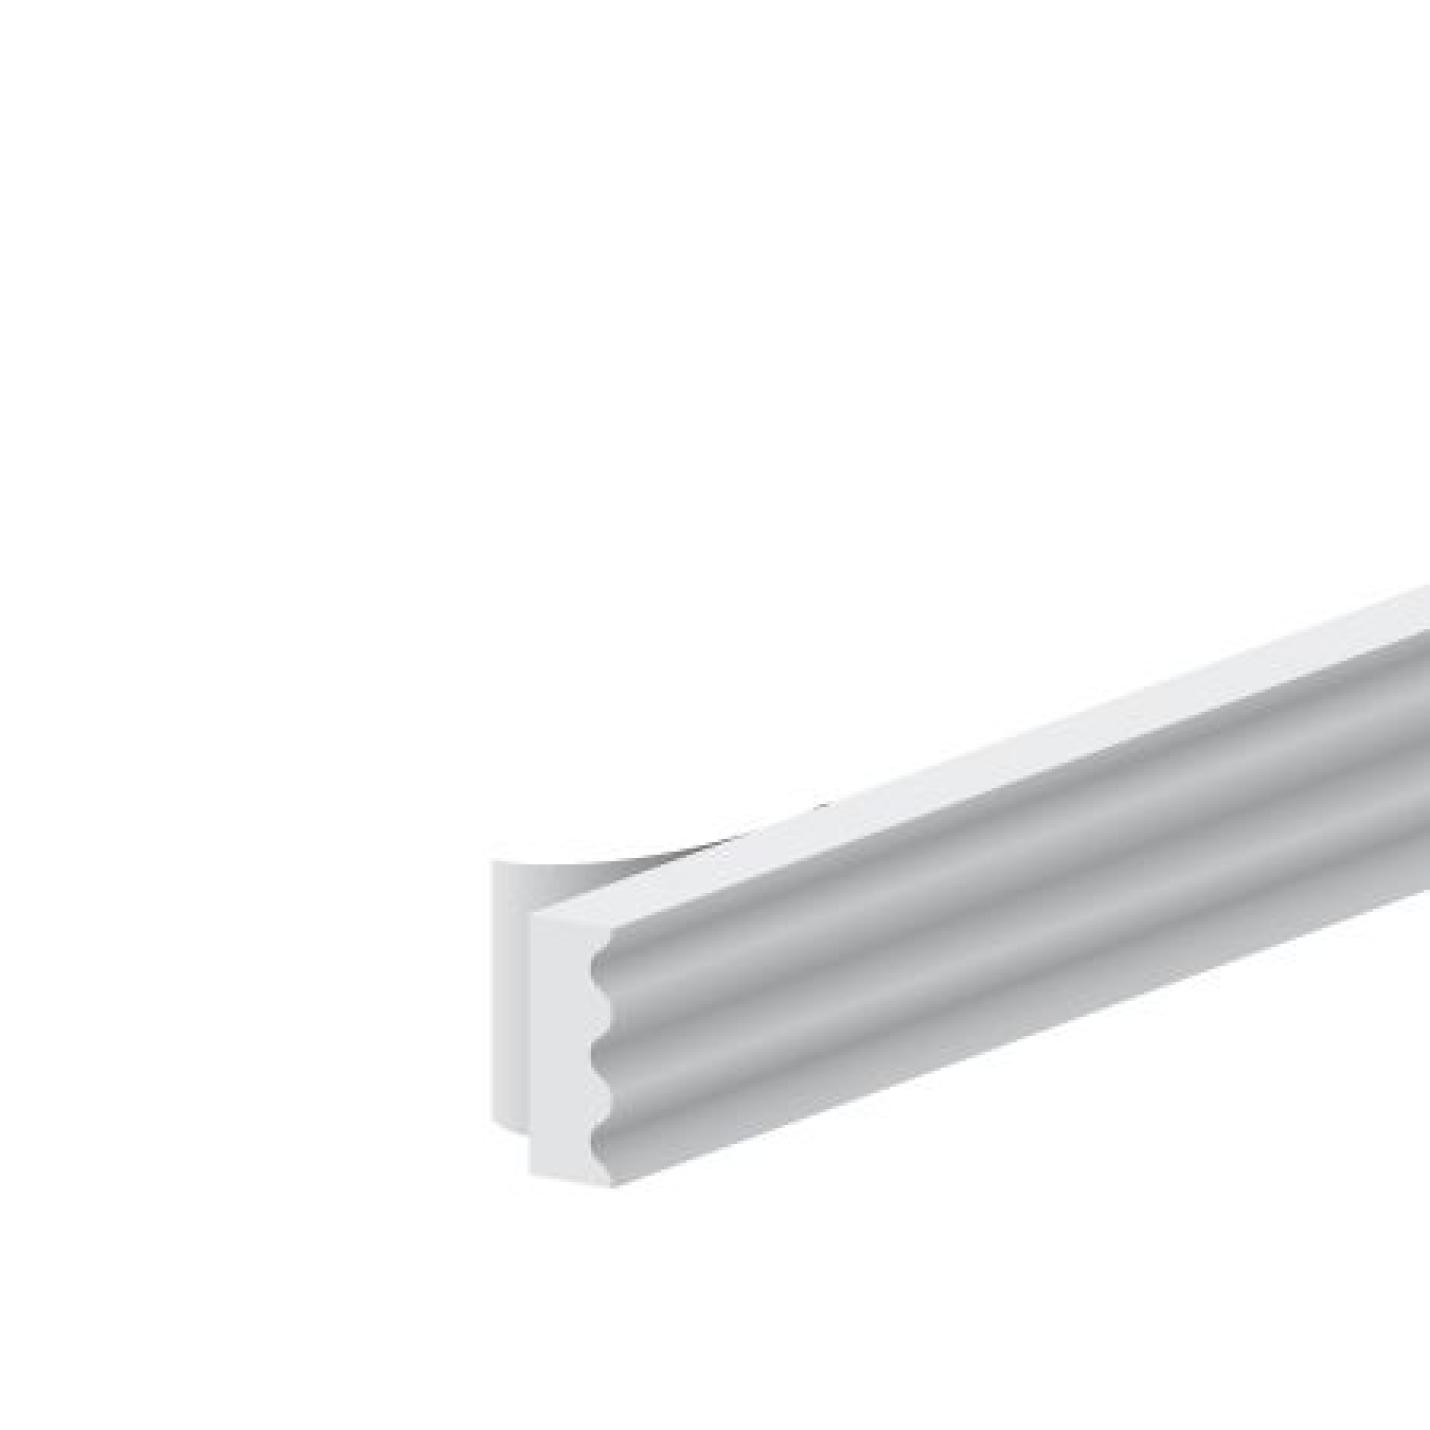 Ellen Tochtstrip K profiel (kleine kier: 2-3mm) 7,5m wit; Afbeelding: 3